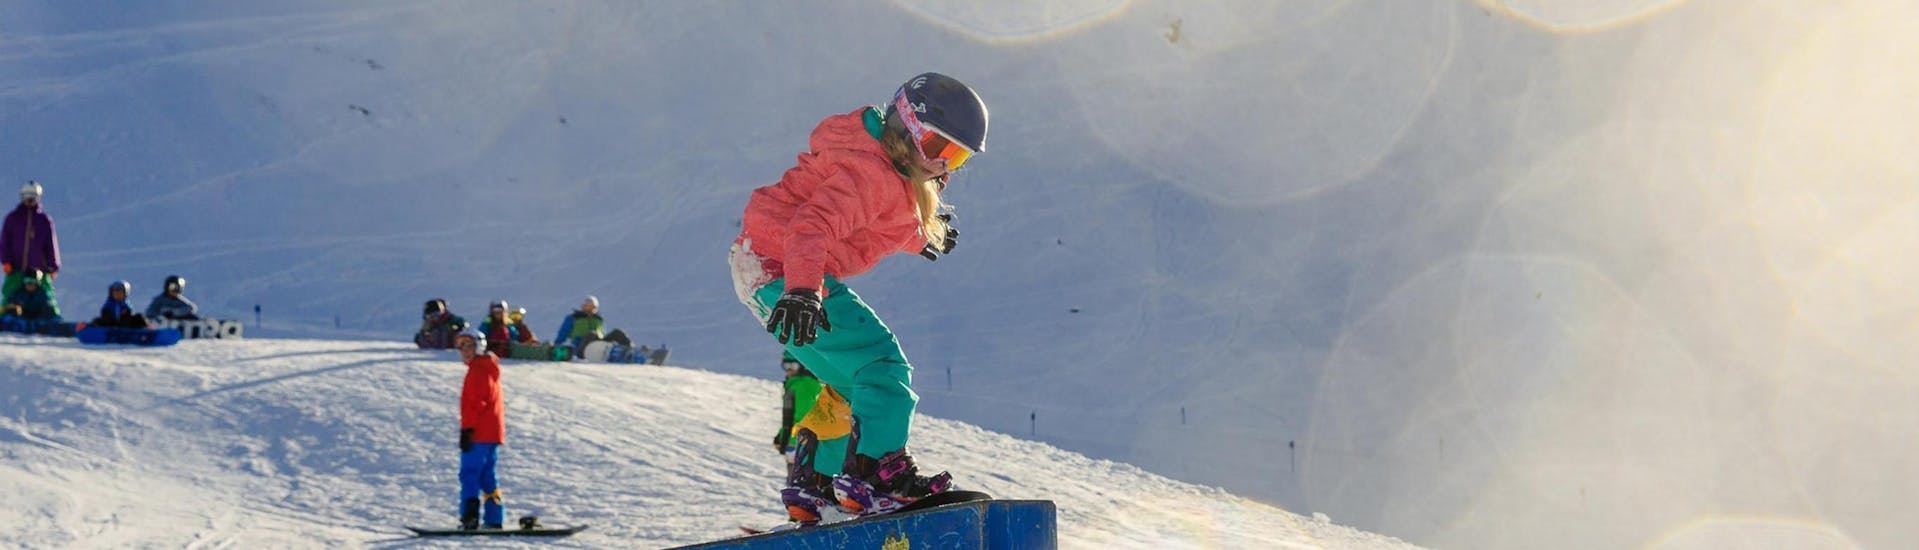 Snowboardlessen voor kinderen (vanaf 7 jaar) voor alle niveaus met Ski School ESKIMOS Saas-Fee.